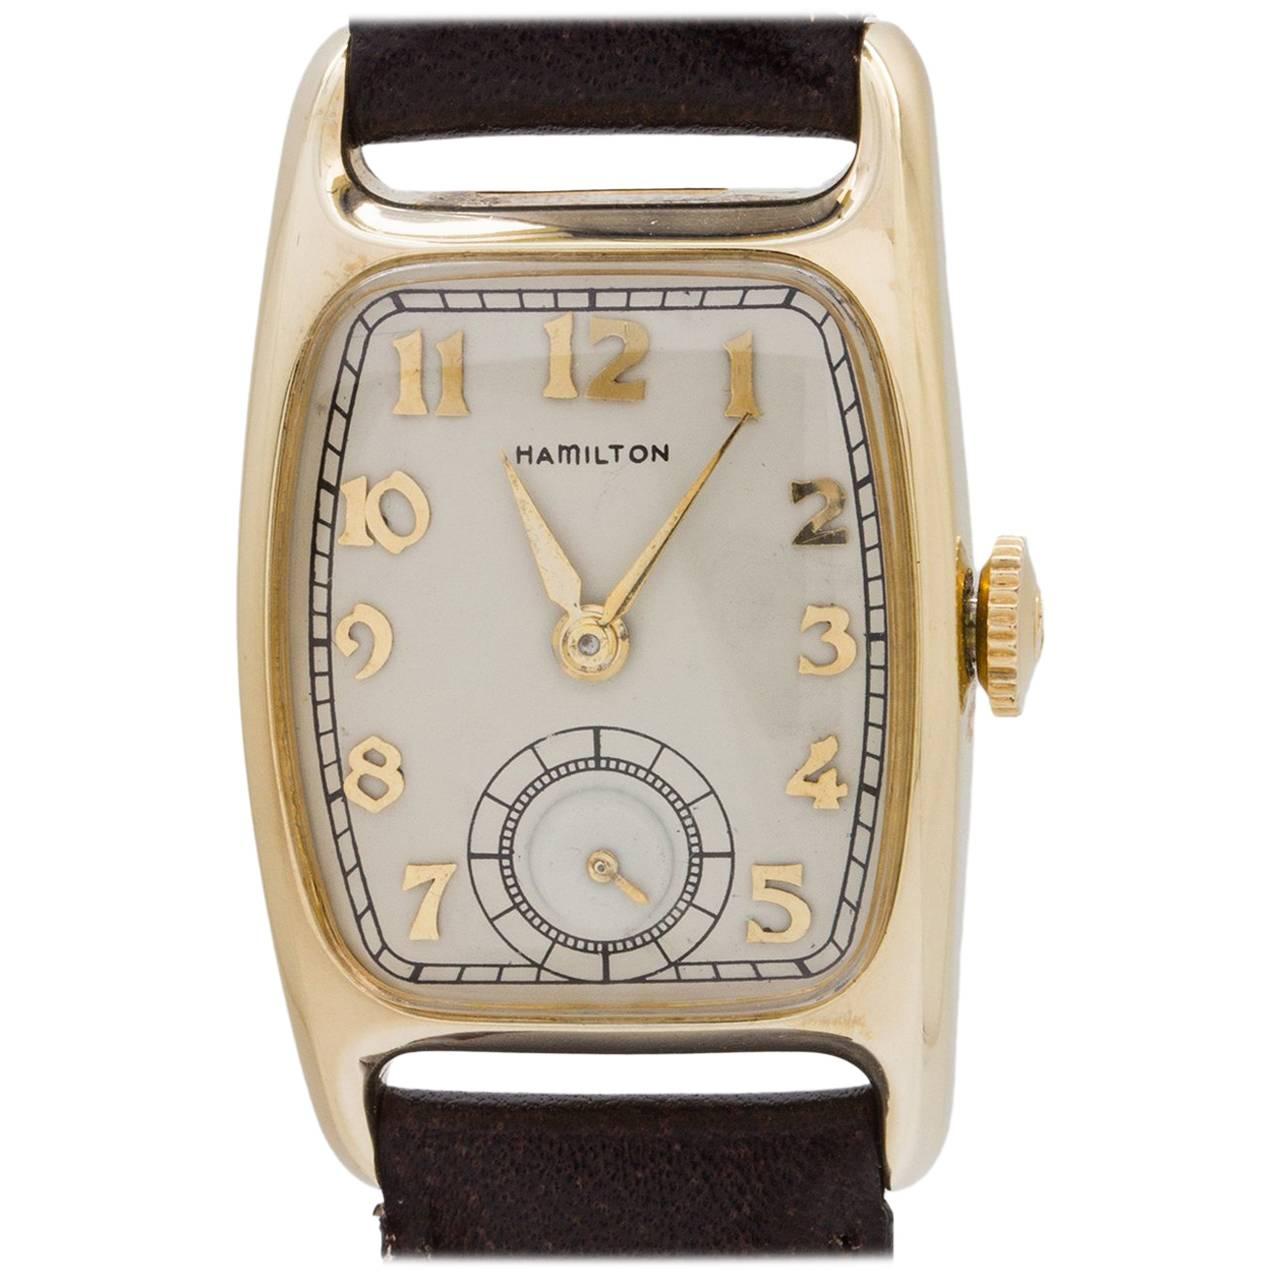 Hamilton Gold Filled Boulton Manual Wristwatch, circa 1940s